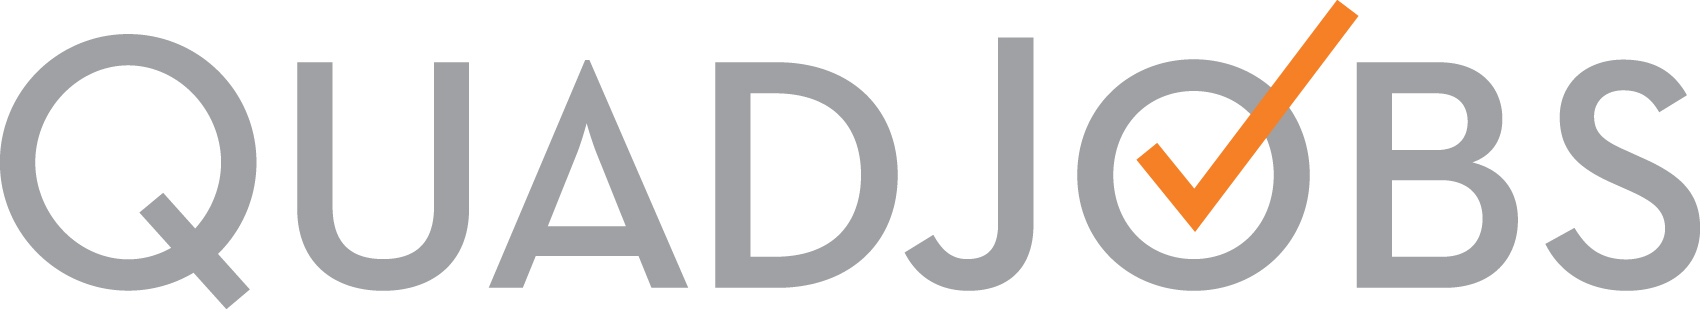 Quadjobs logo